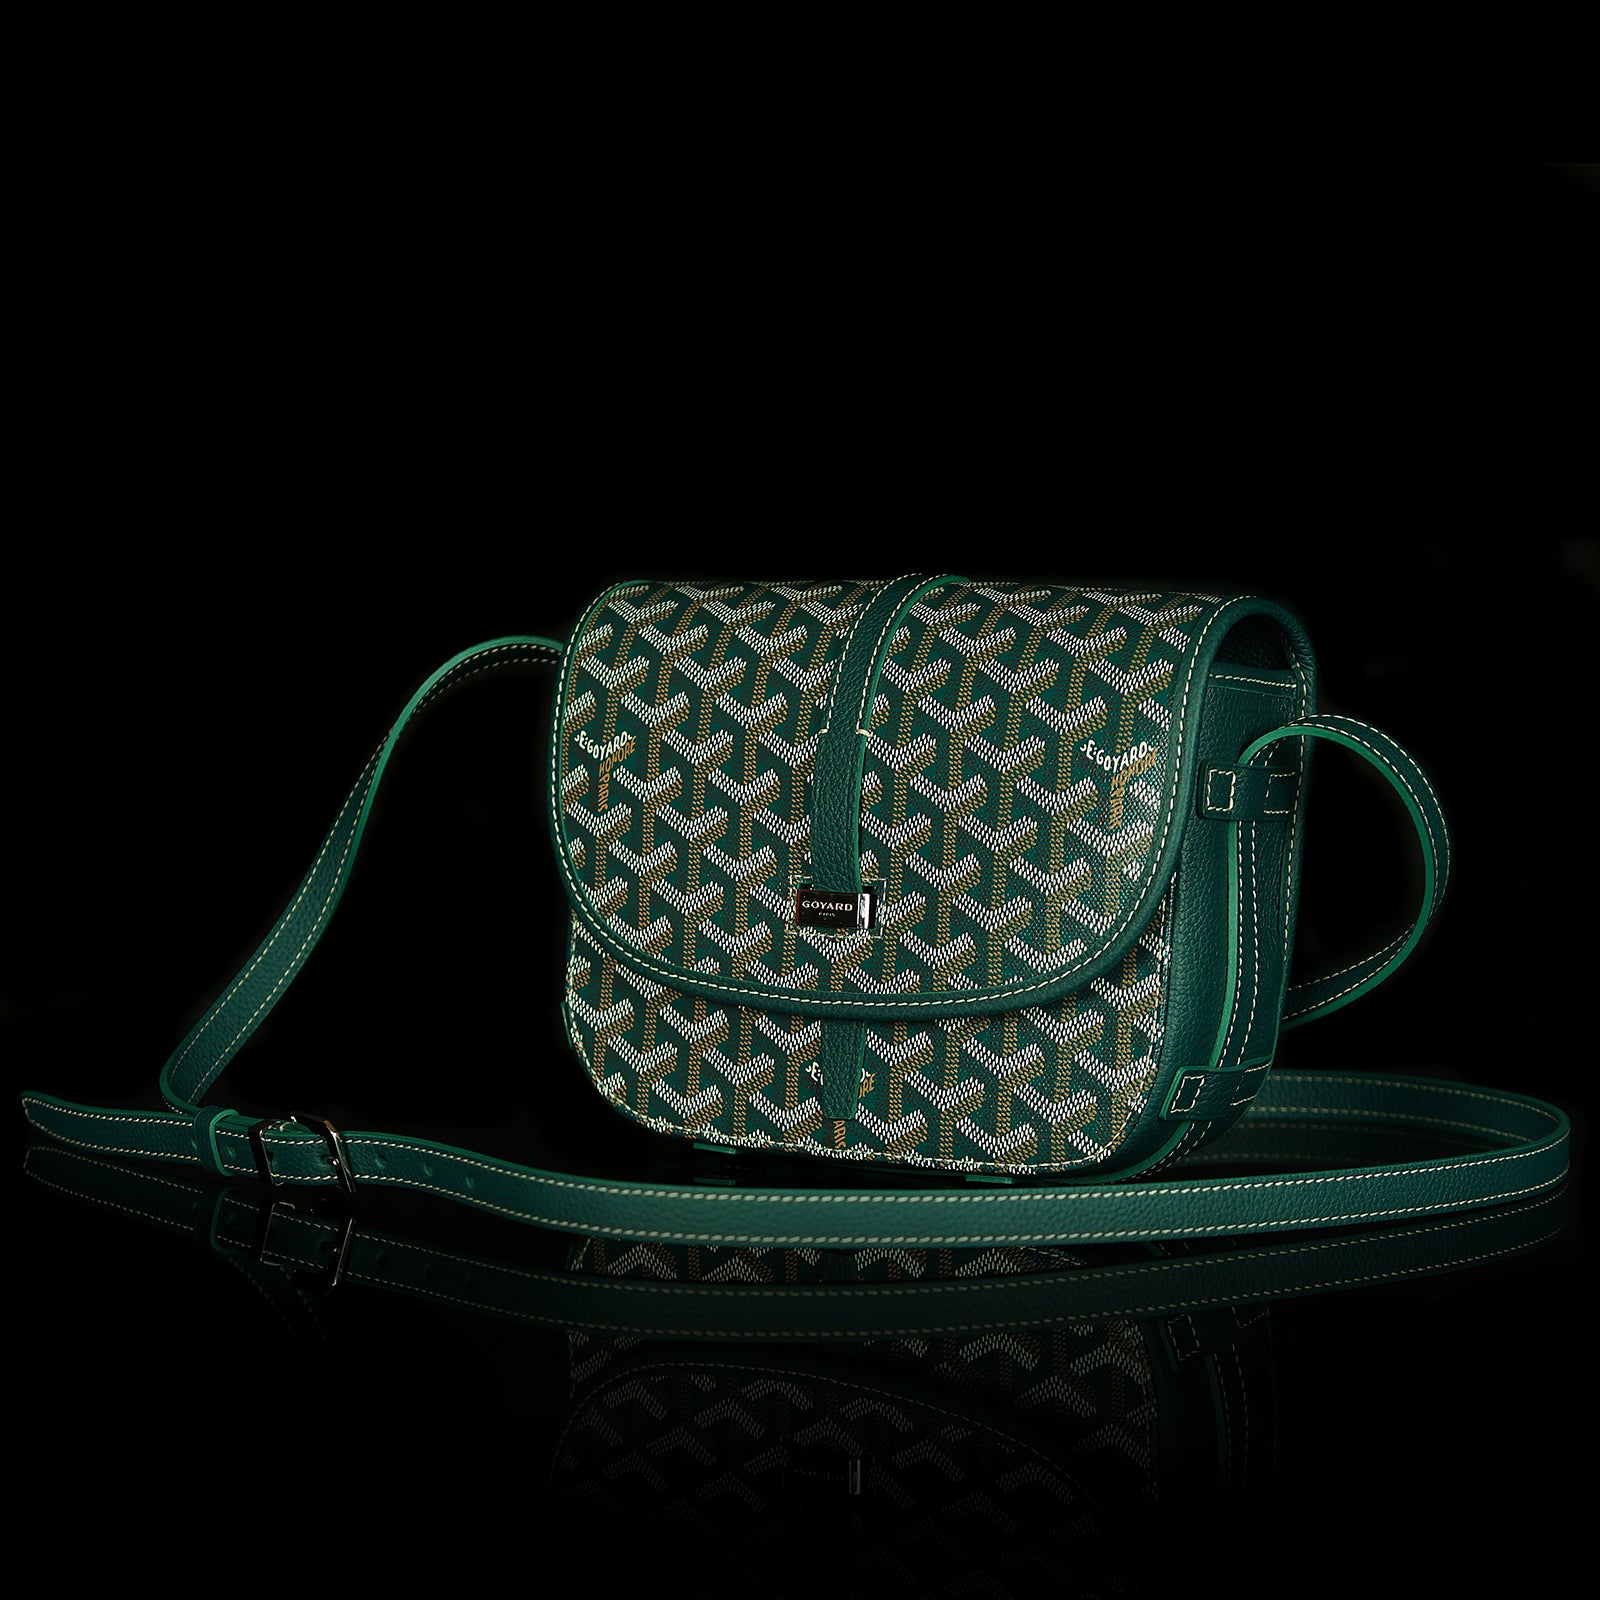 Belvedere PM – Keeks Designer Handbags